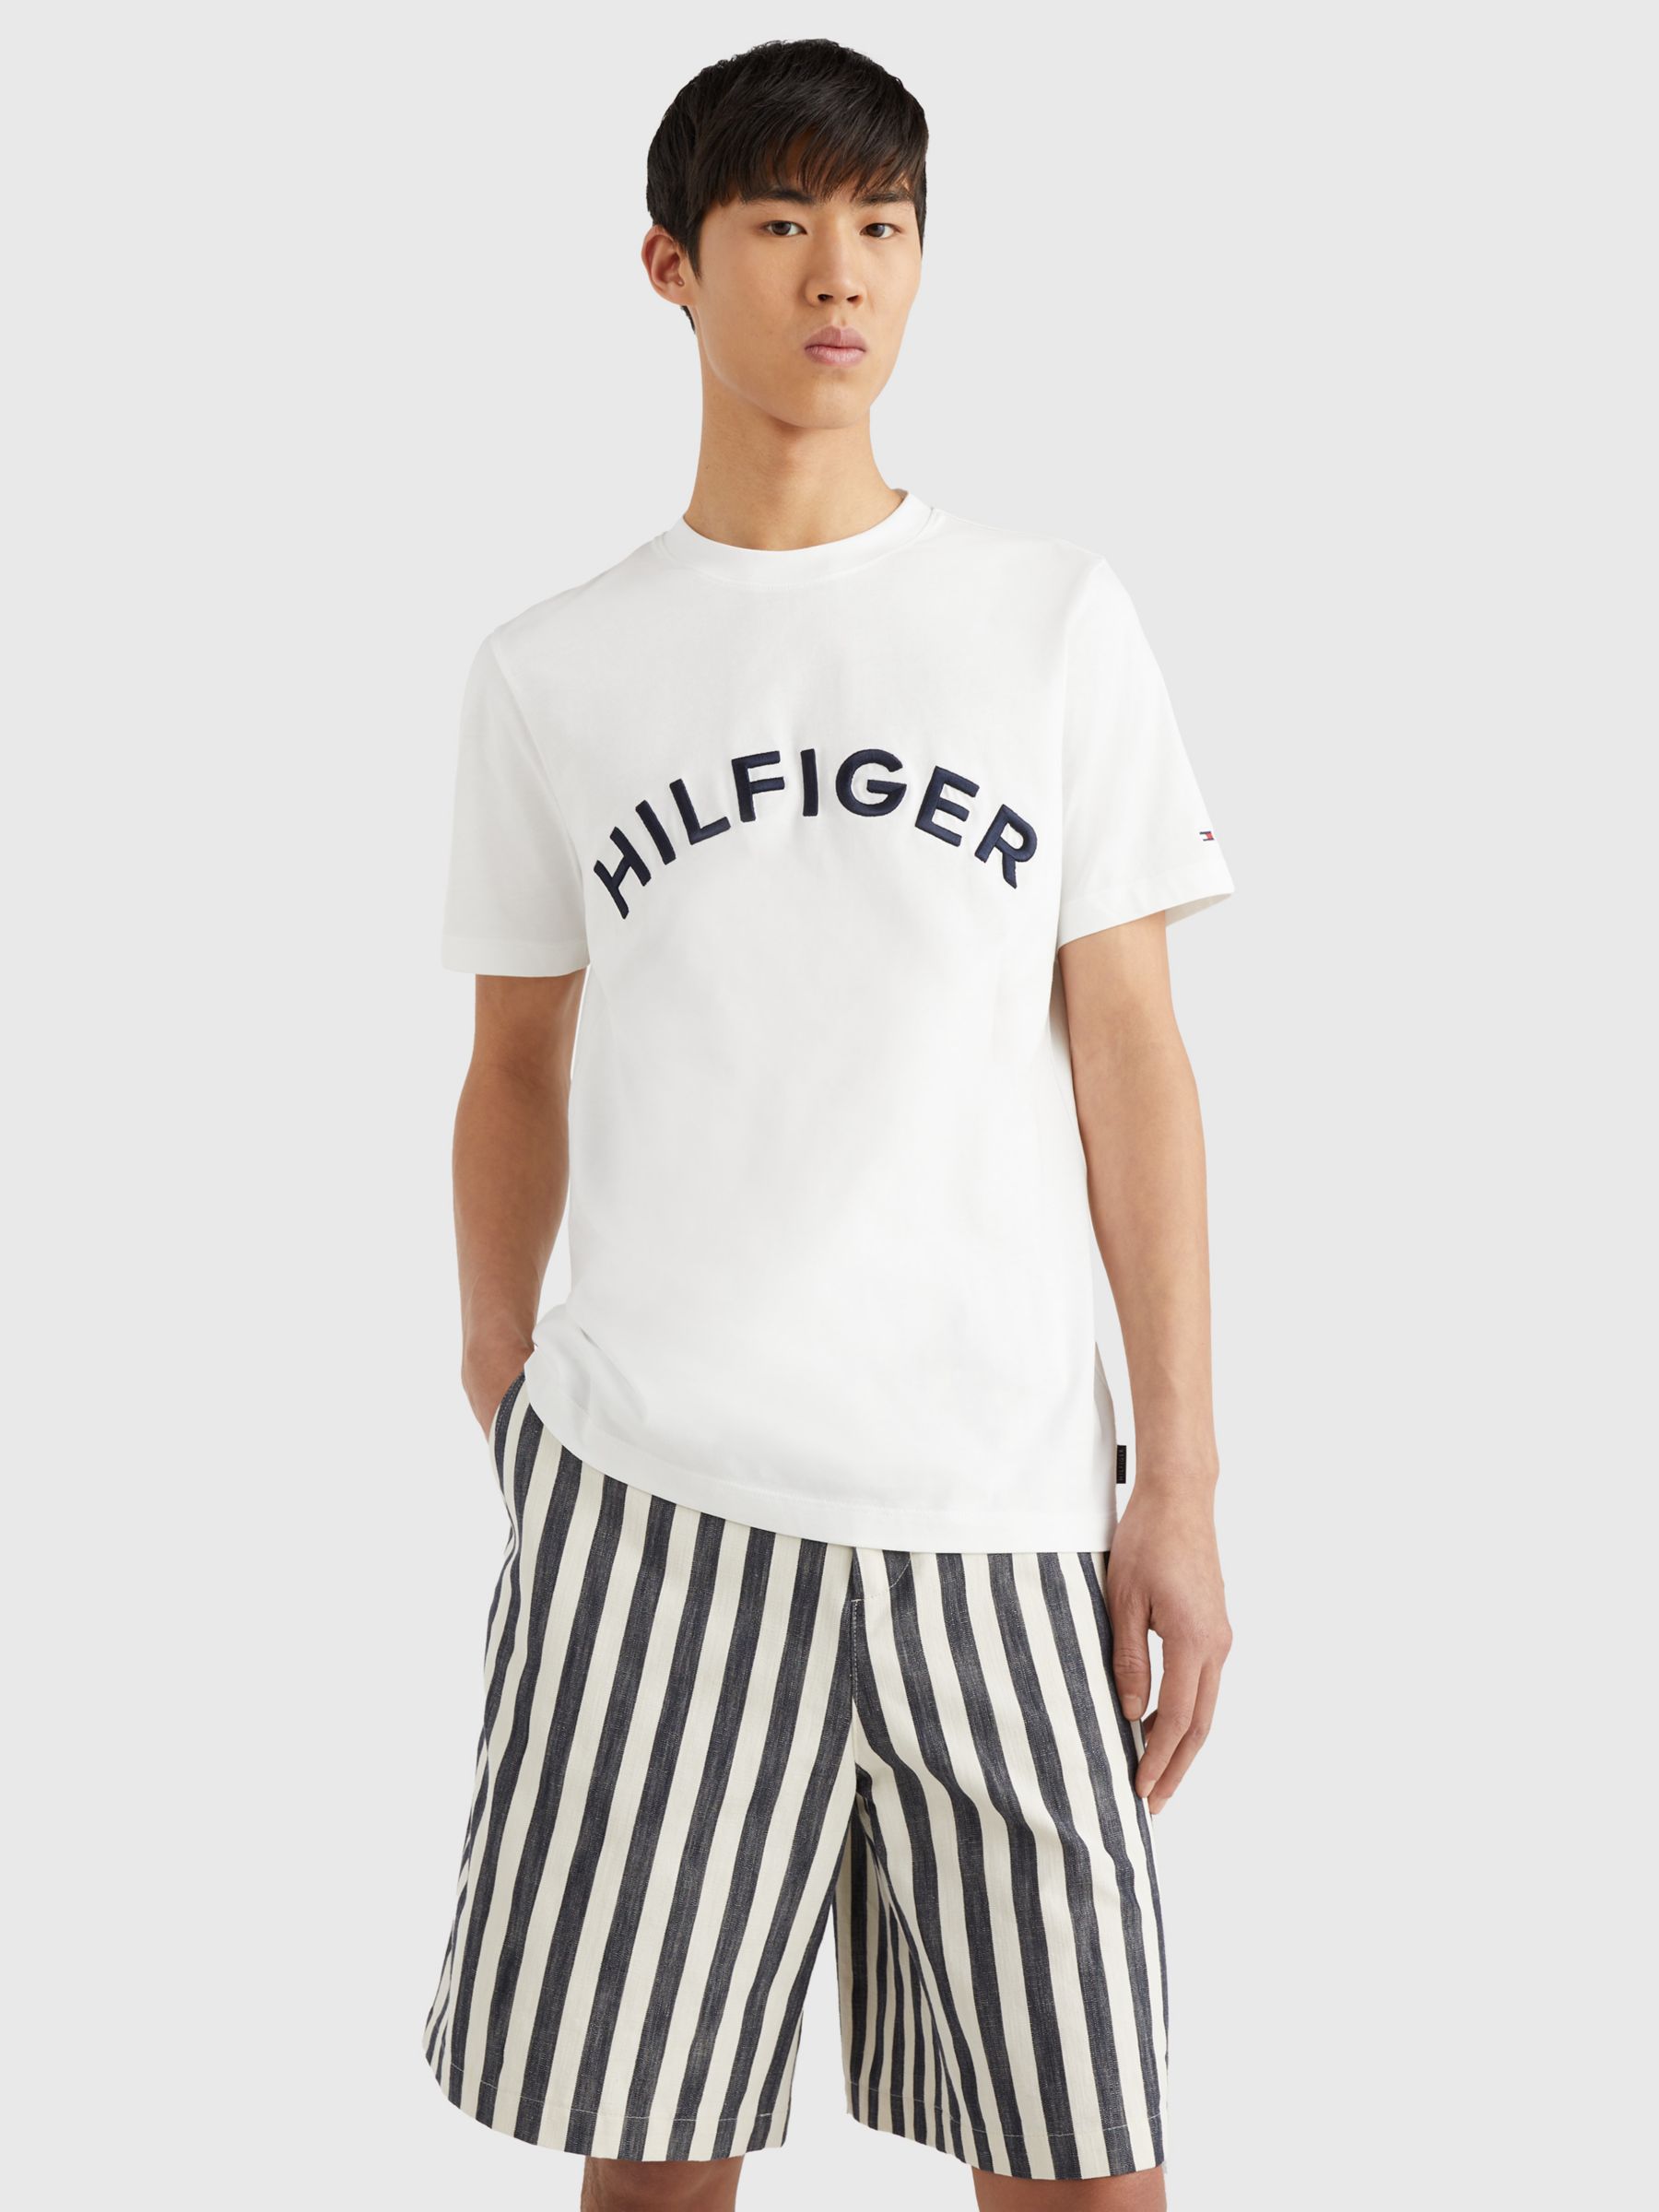 Tommy Hilfiger Men's T-shirt, White, S